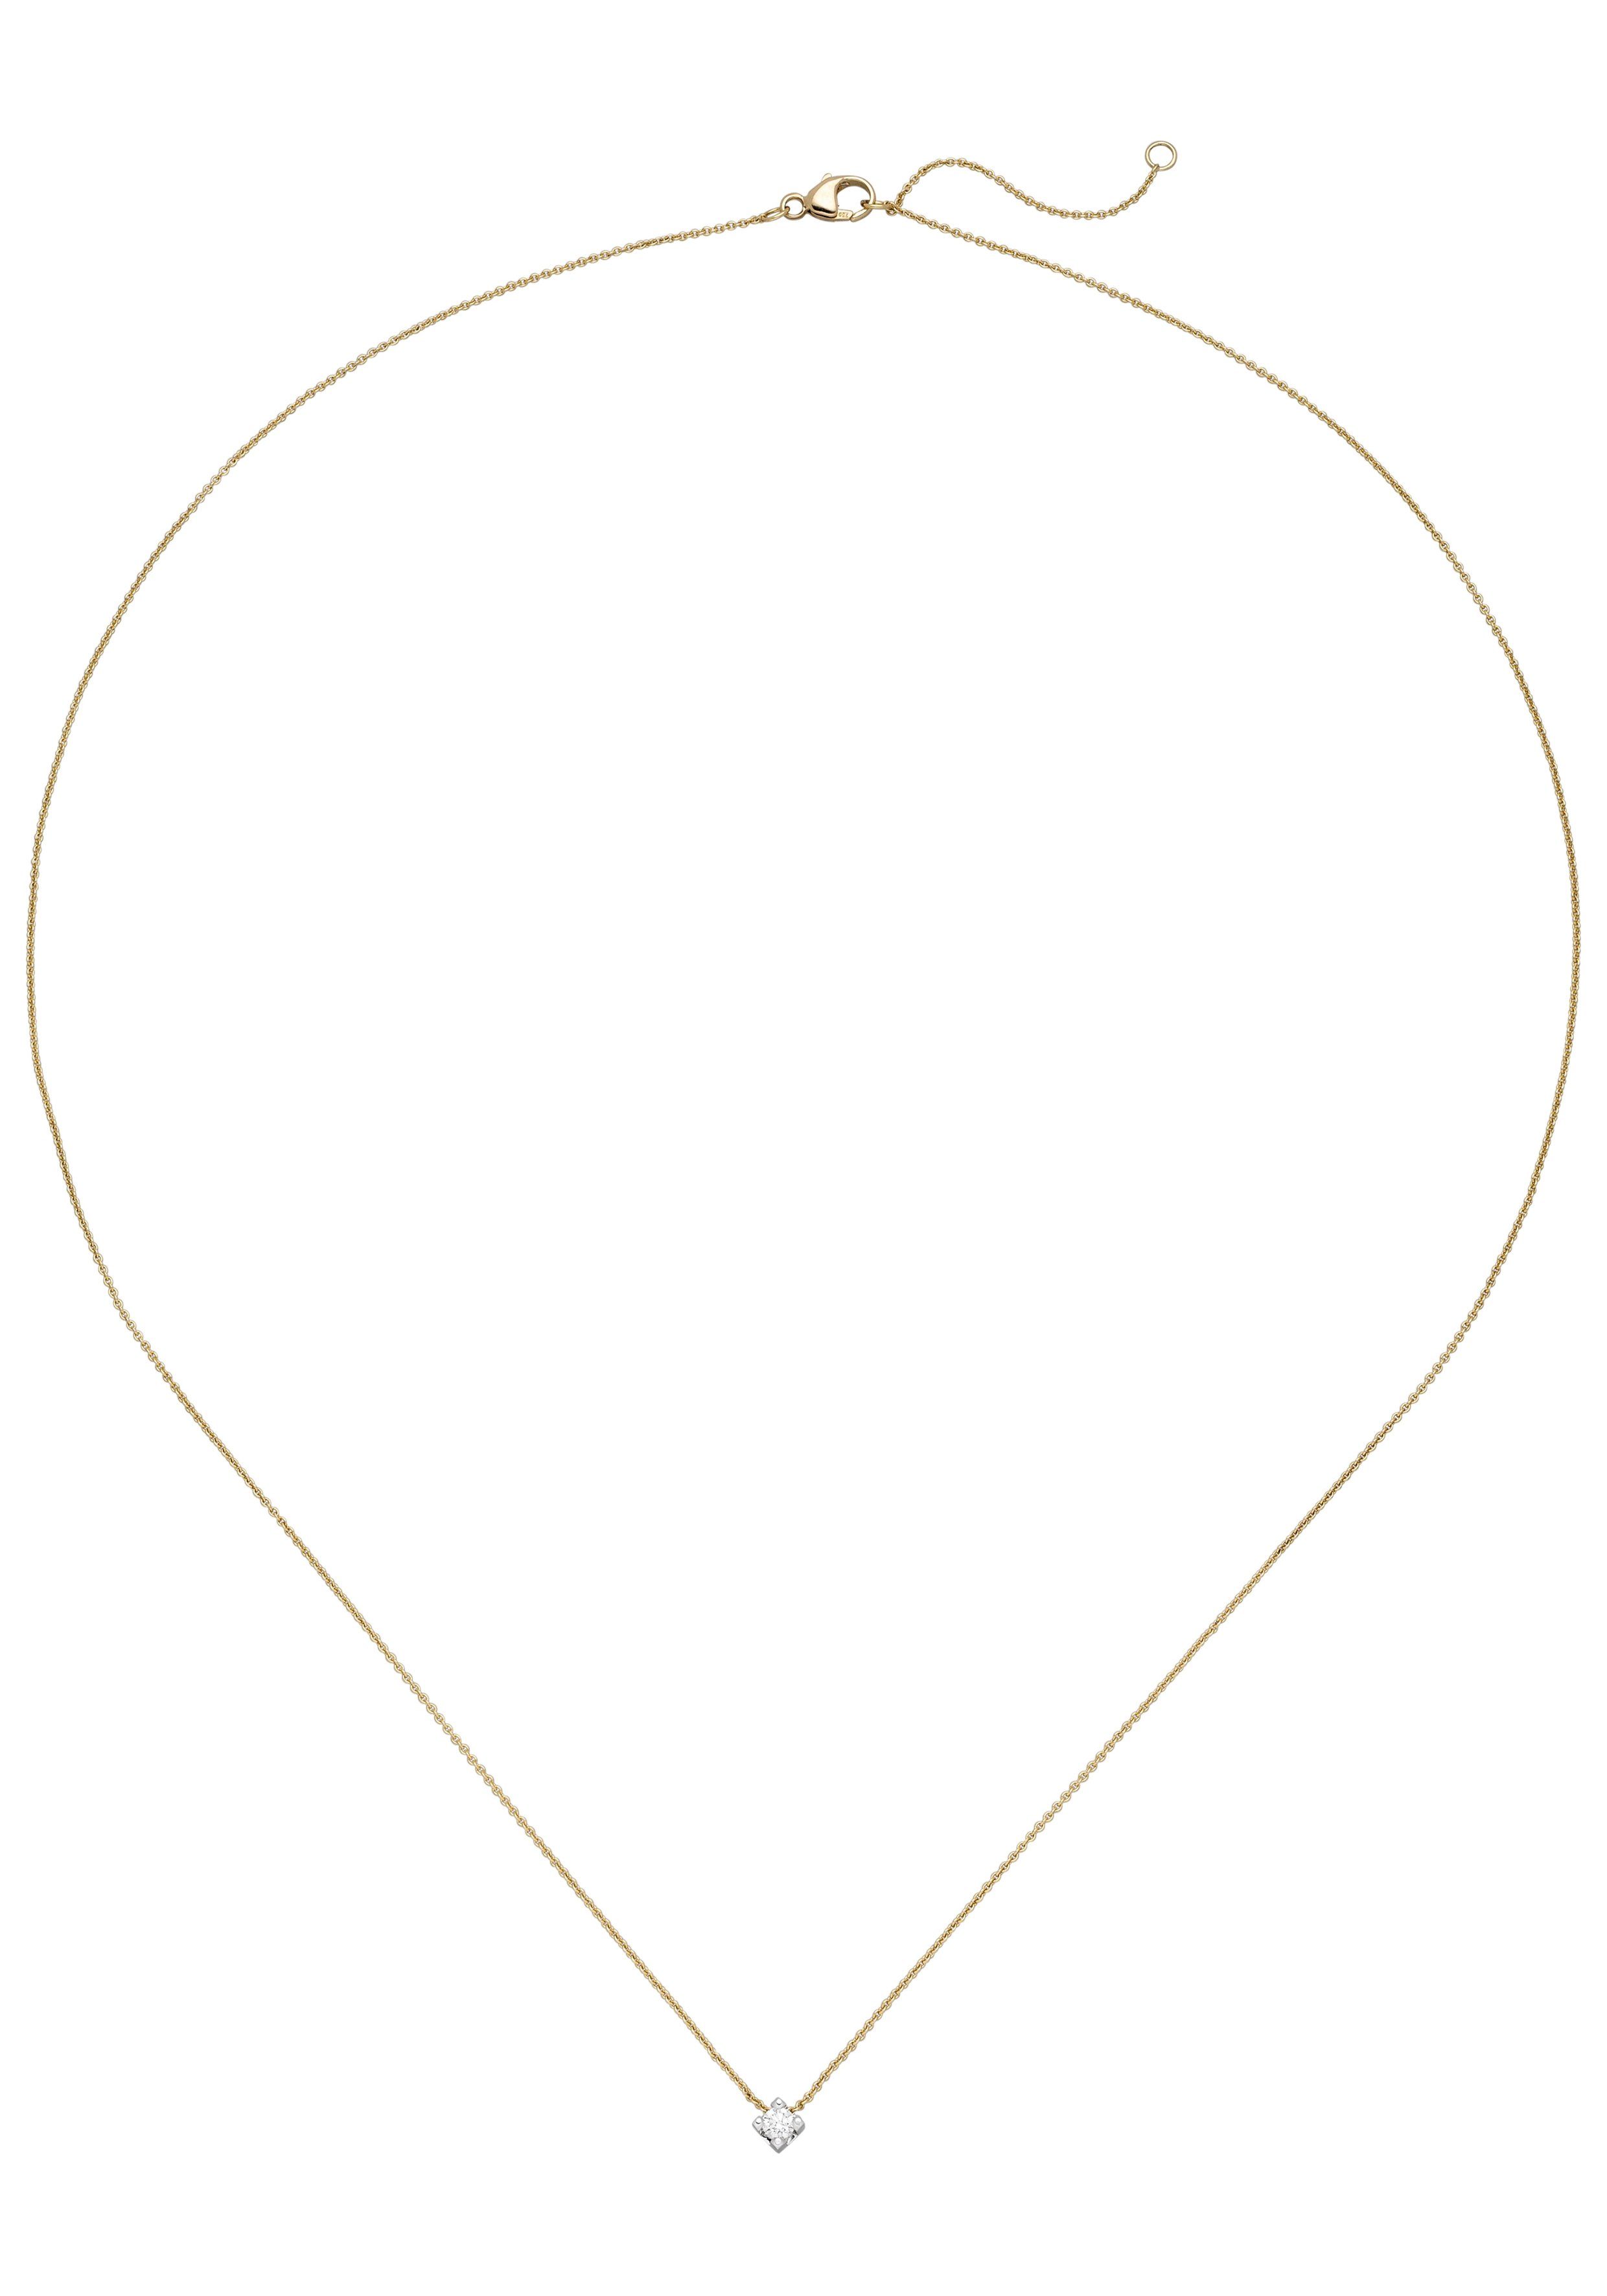 JOBO Goldkette Solitär, 750 Gold bicolor mit 1 Diamant 45 cm